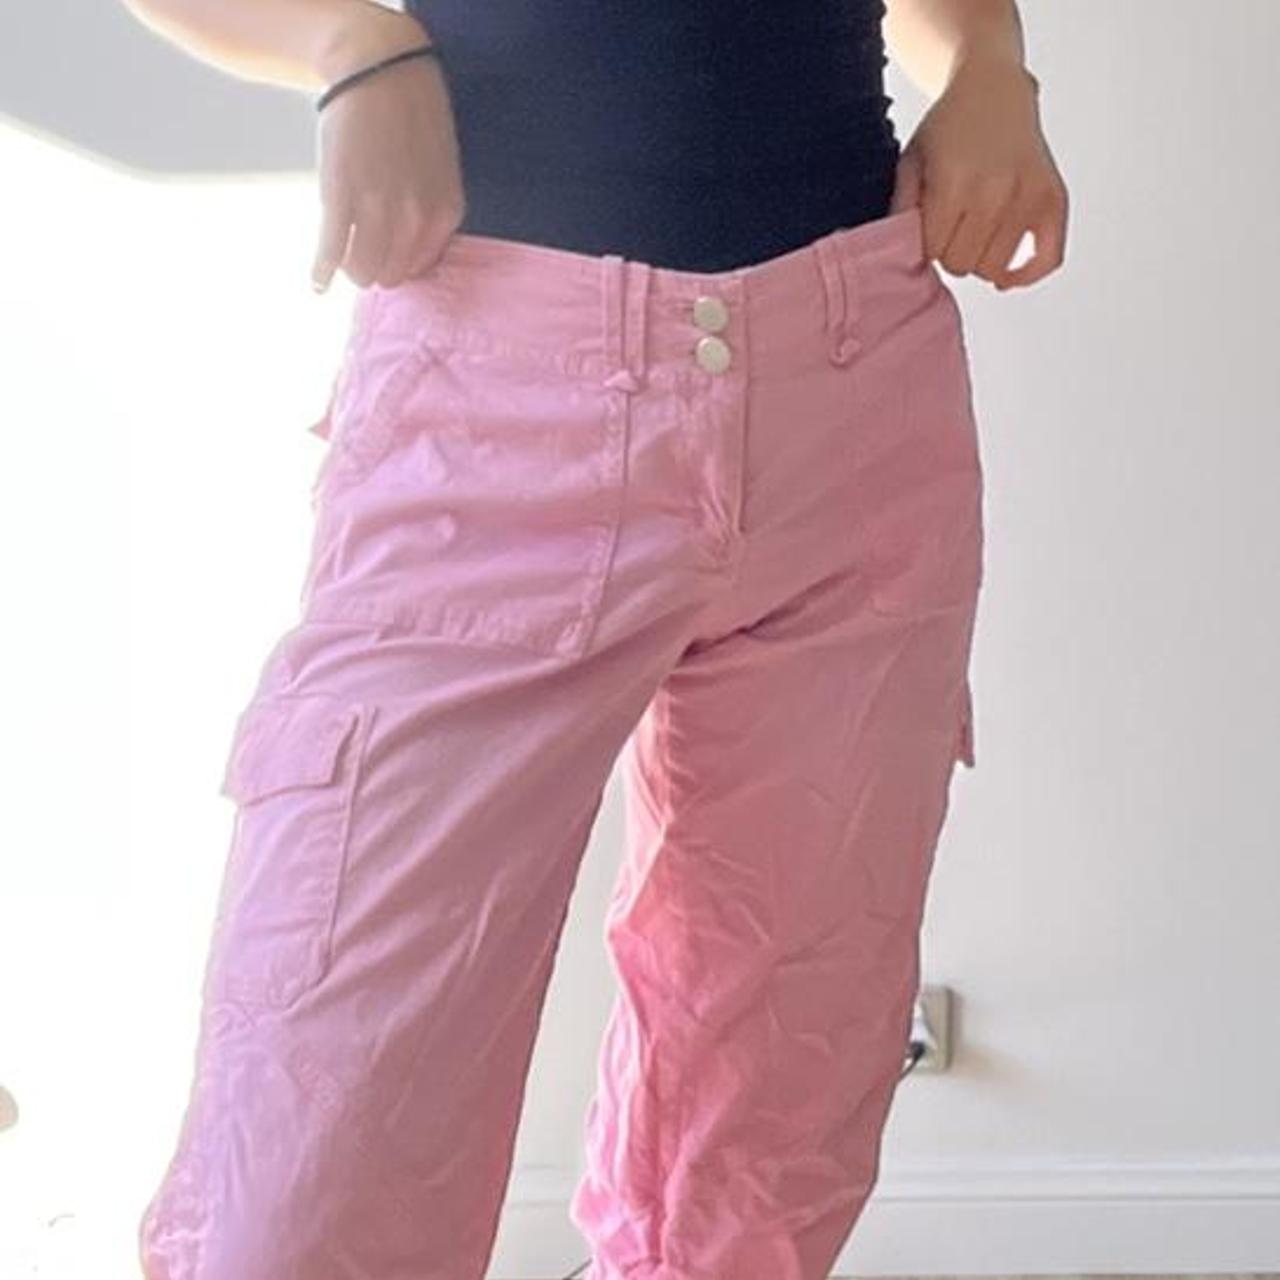 IAMGIA ryder cargo pants in pink - Depop